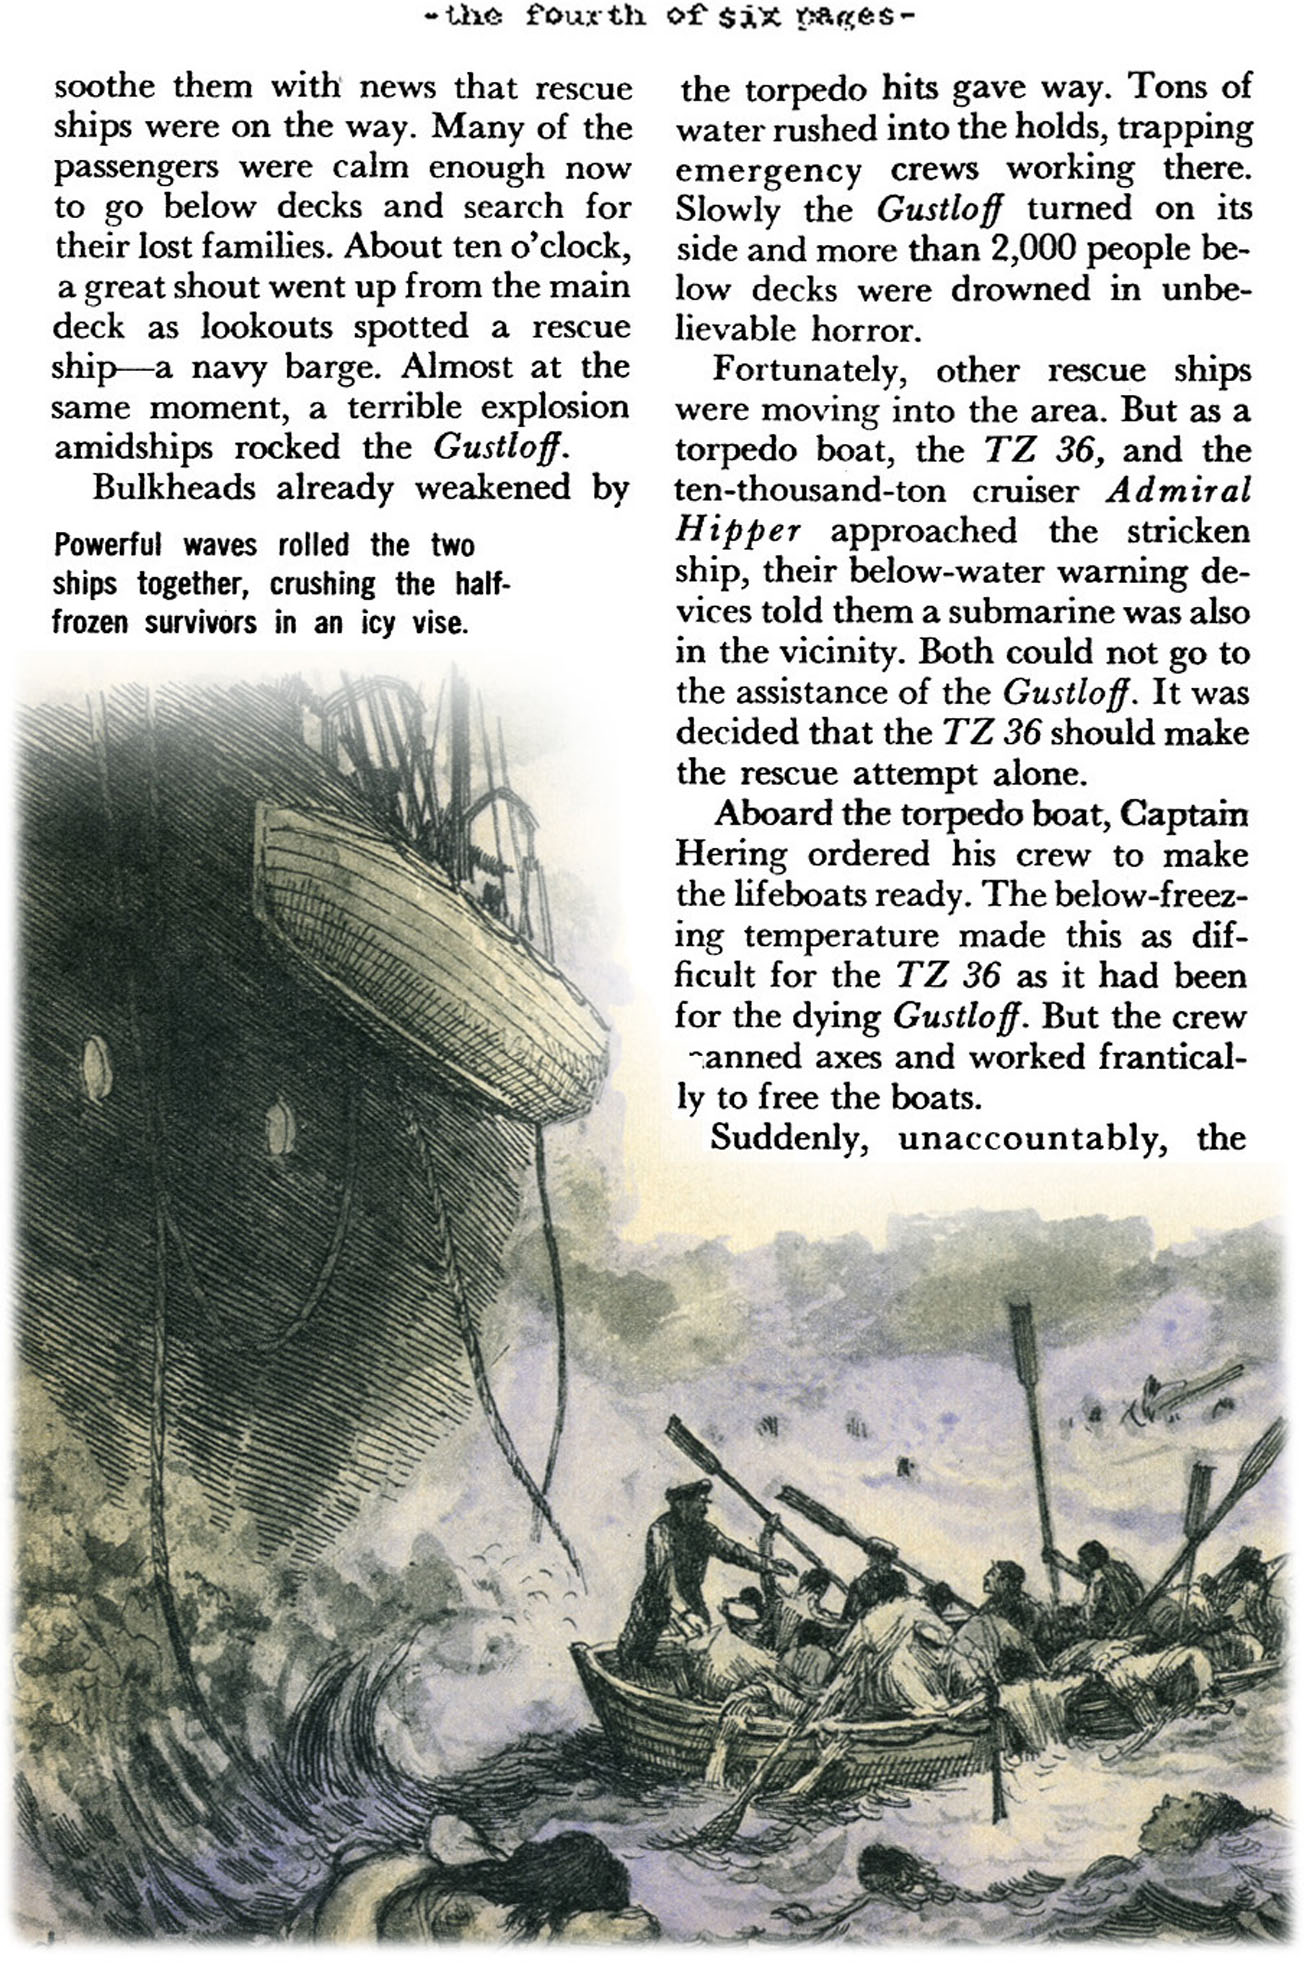 The Submarine that Killed 9,400 People (Coronet Magazine, 1958)